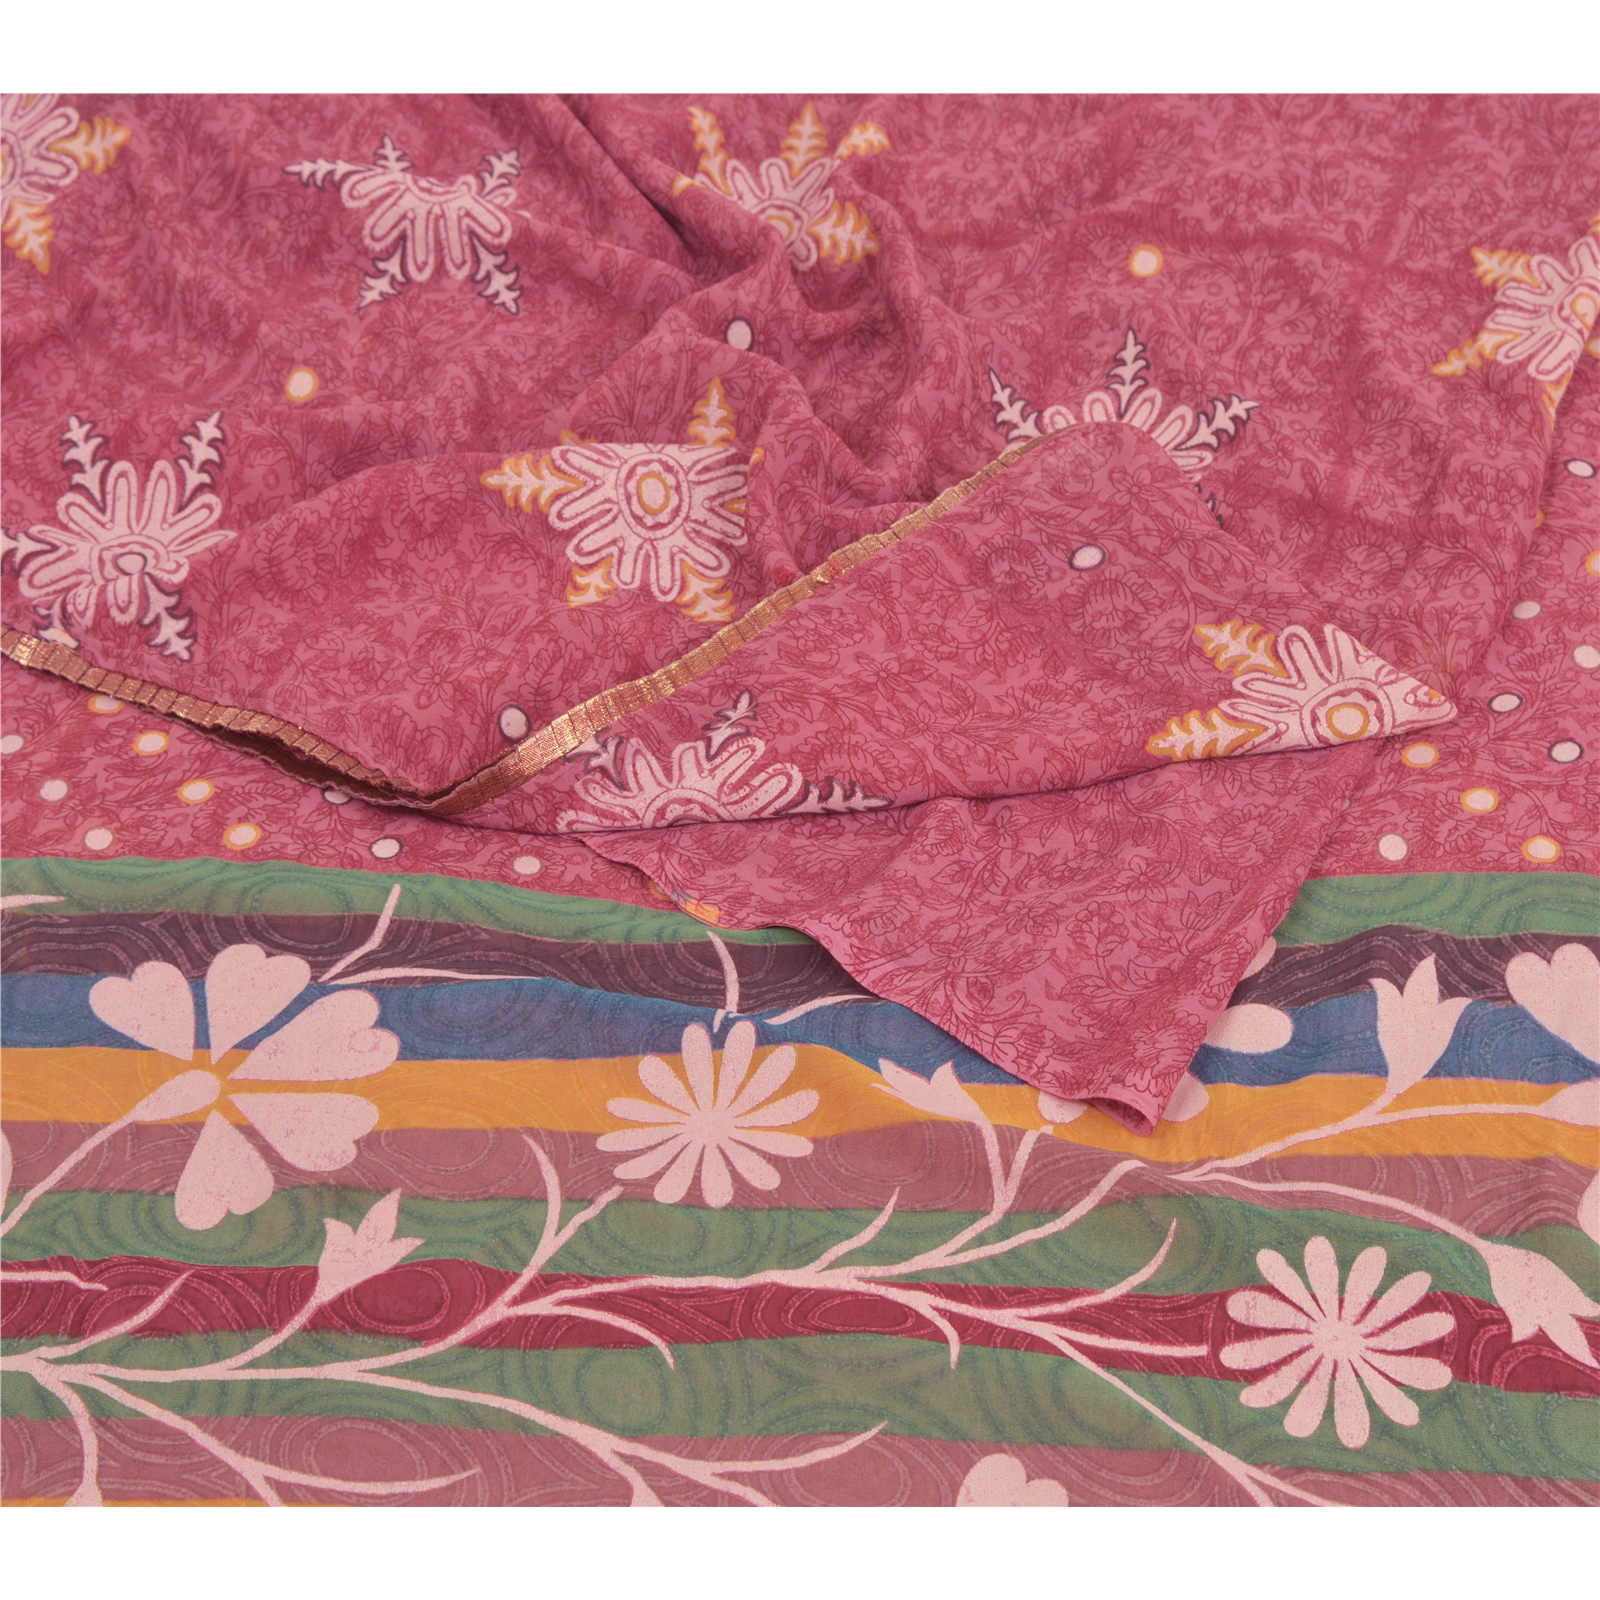 Vintage Sari Moss Crepe Sarees White Printed Decor 5 Yd Craft Fabric